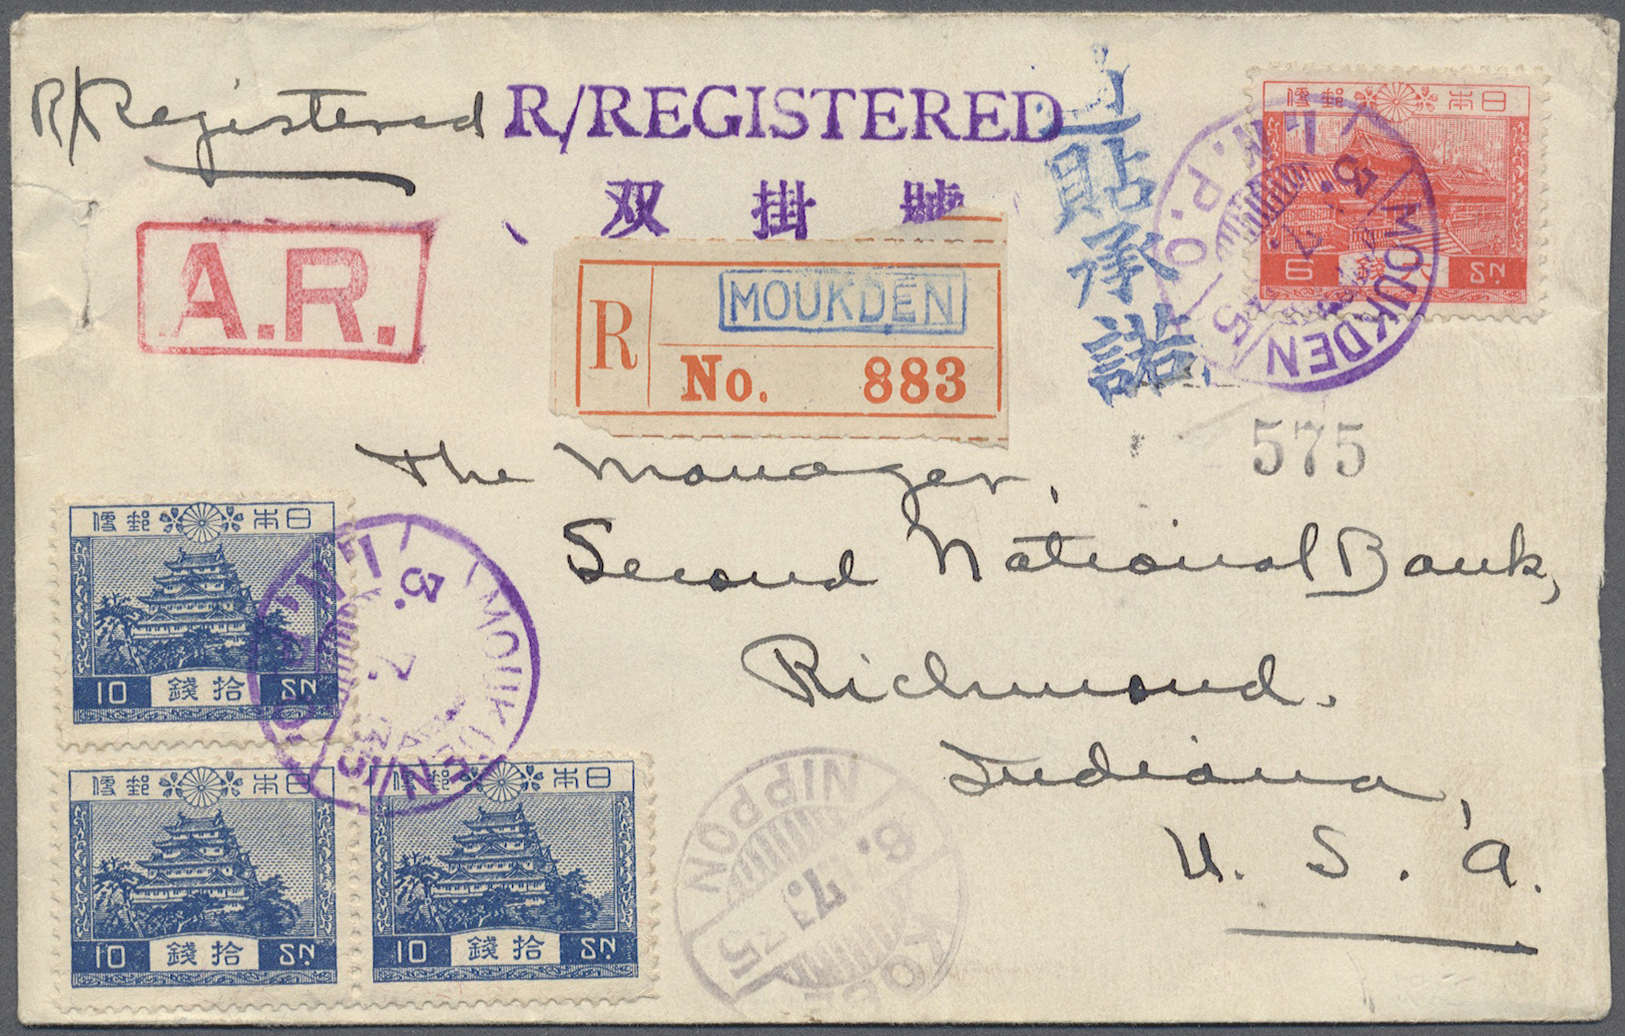 Br Mandschuko (Manchuko): 1935. Registered Advice Of Receipt Envelope Addressed To The United States Bearing Japan SG 24 - 1932-45 Manchuria (Manchukuo)